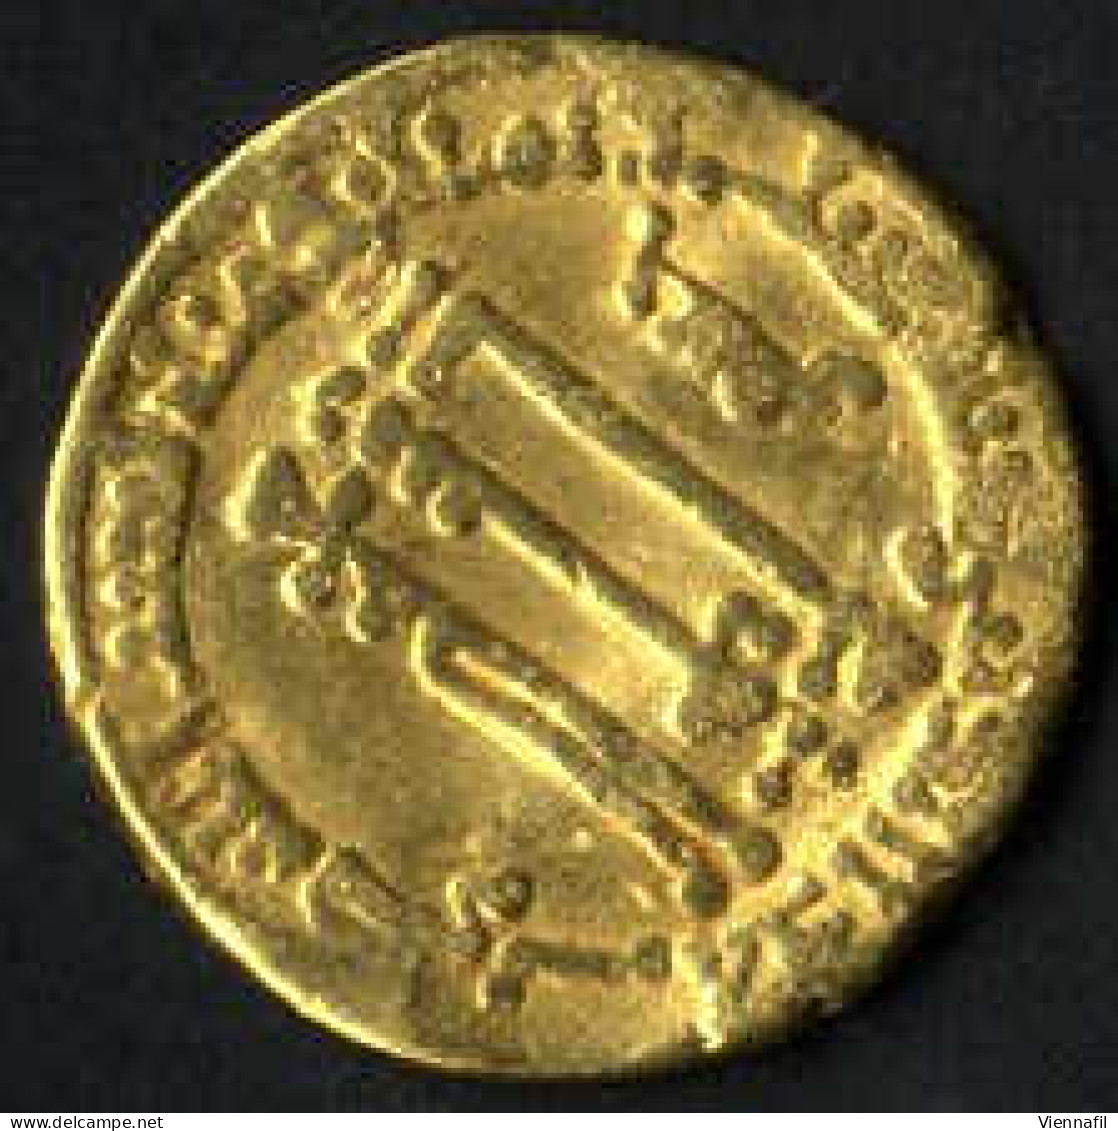 Harun Er-Rashid, 170-193AH 786-809, Dinar Gold, 186 Ohne Münzstätte Ja ' Far, BMC 153 Var., Sehr Schön - Islamiche